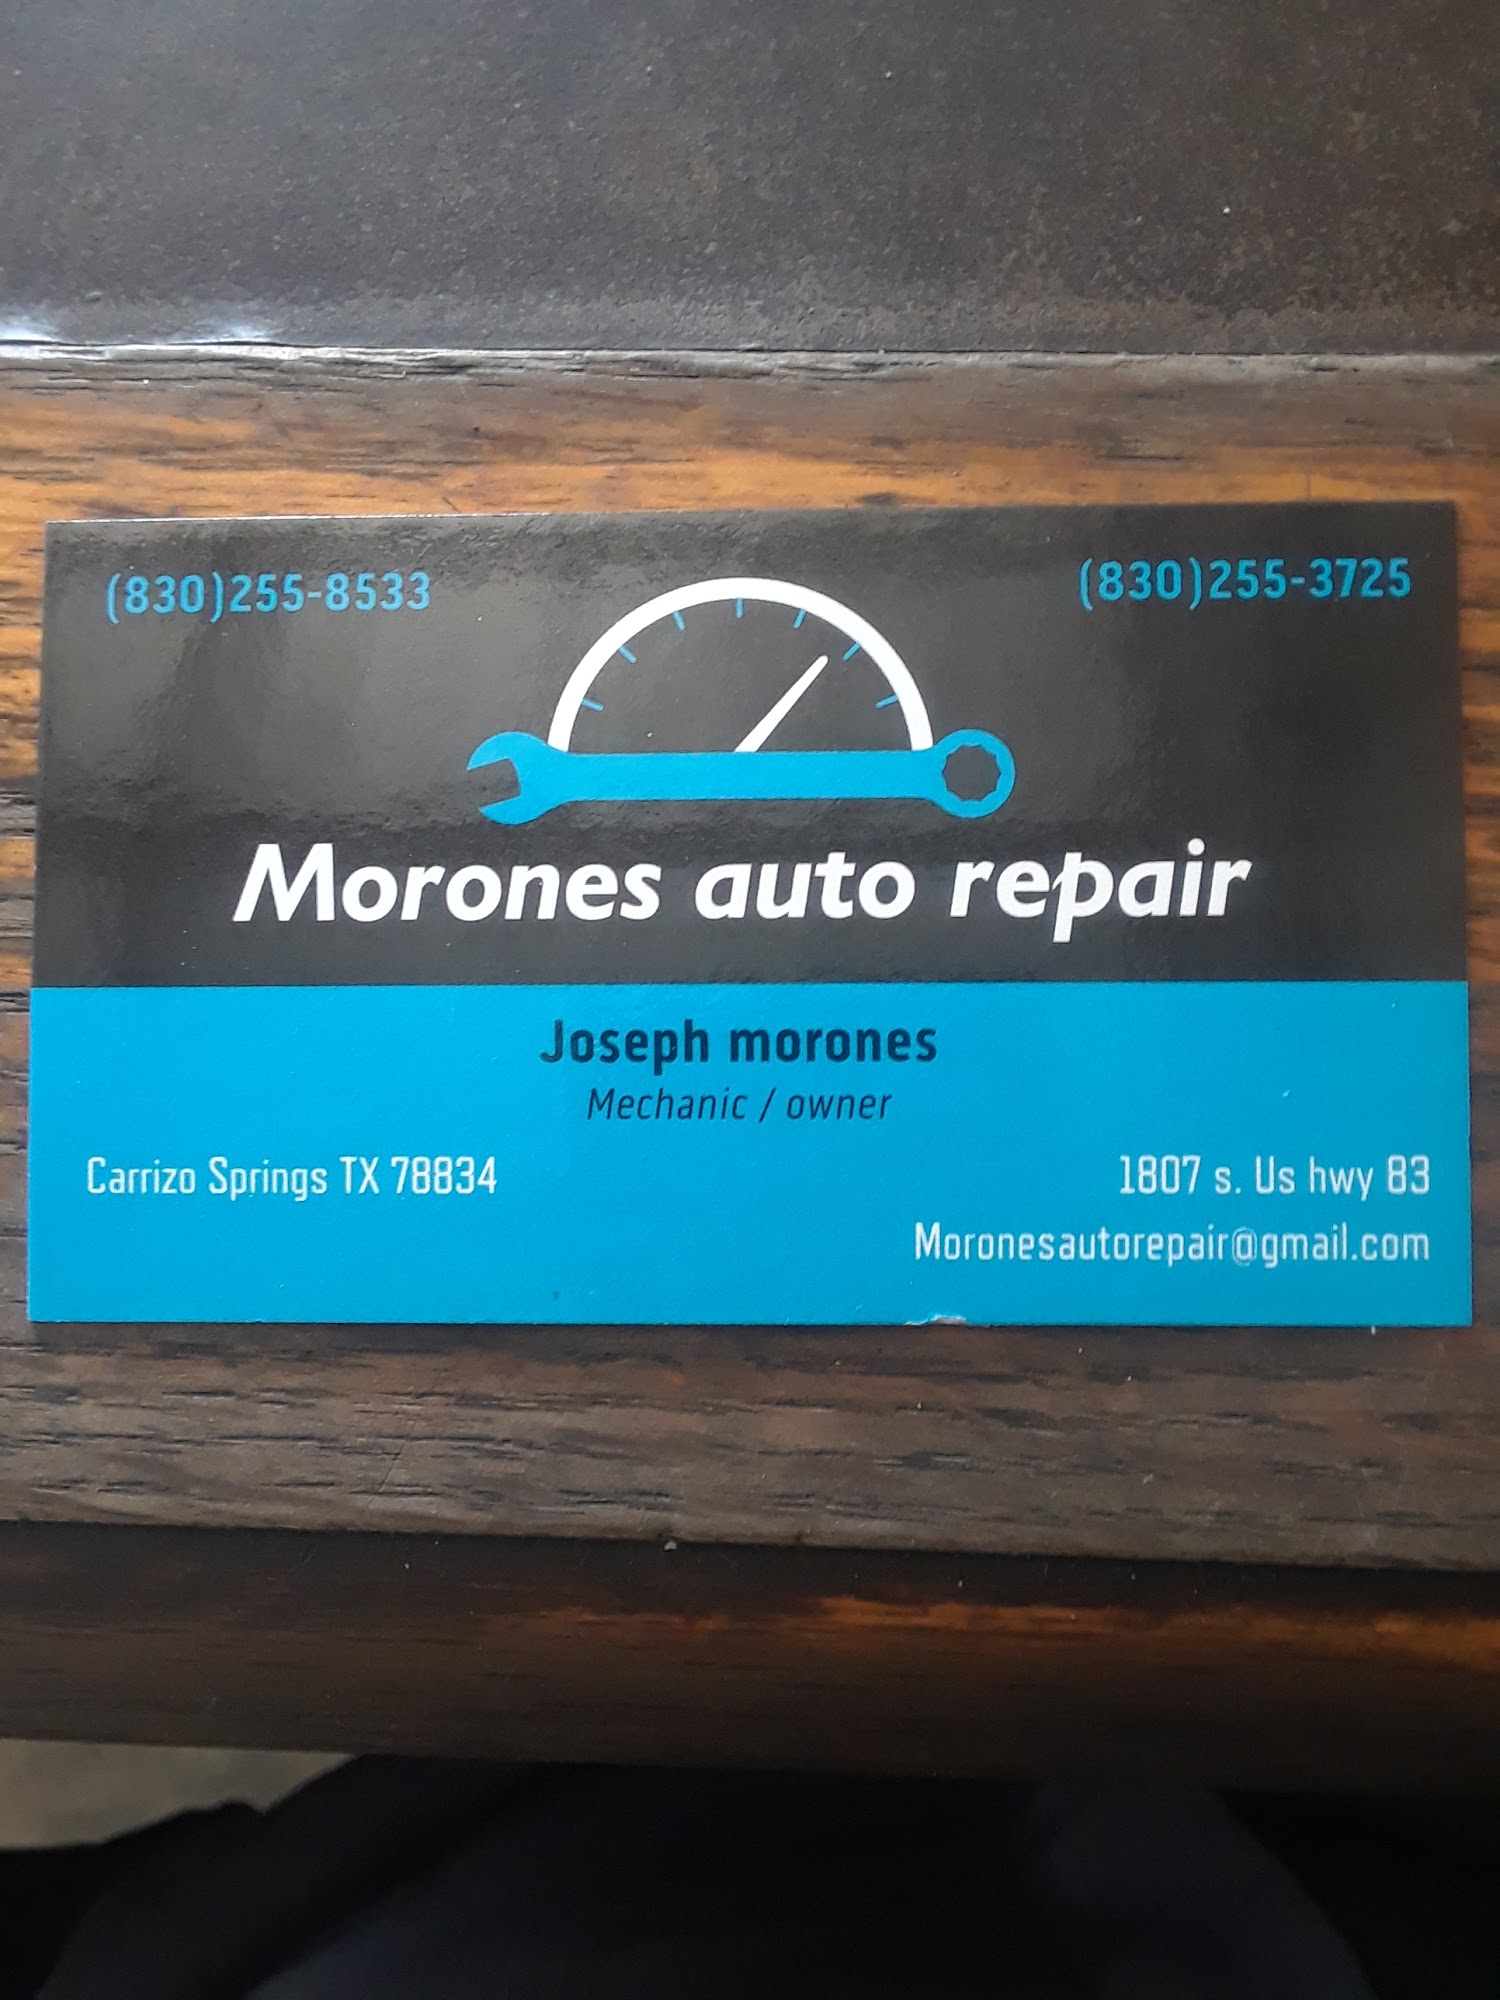 Morone's Auto Repair